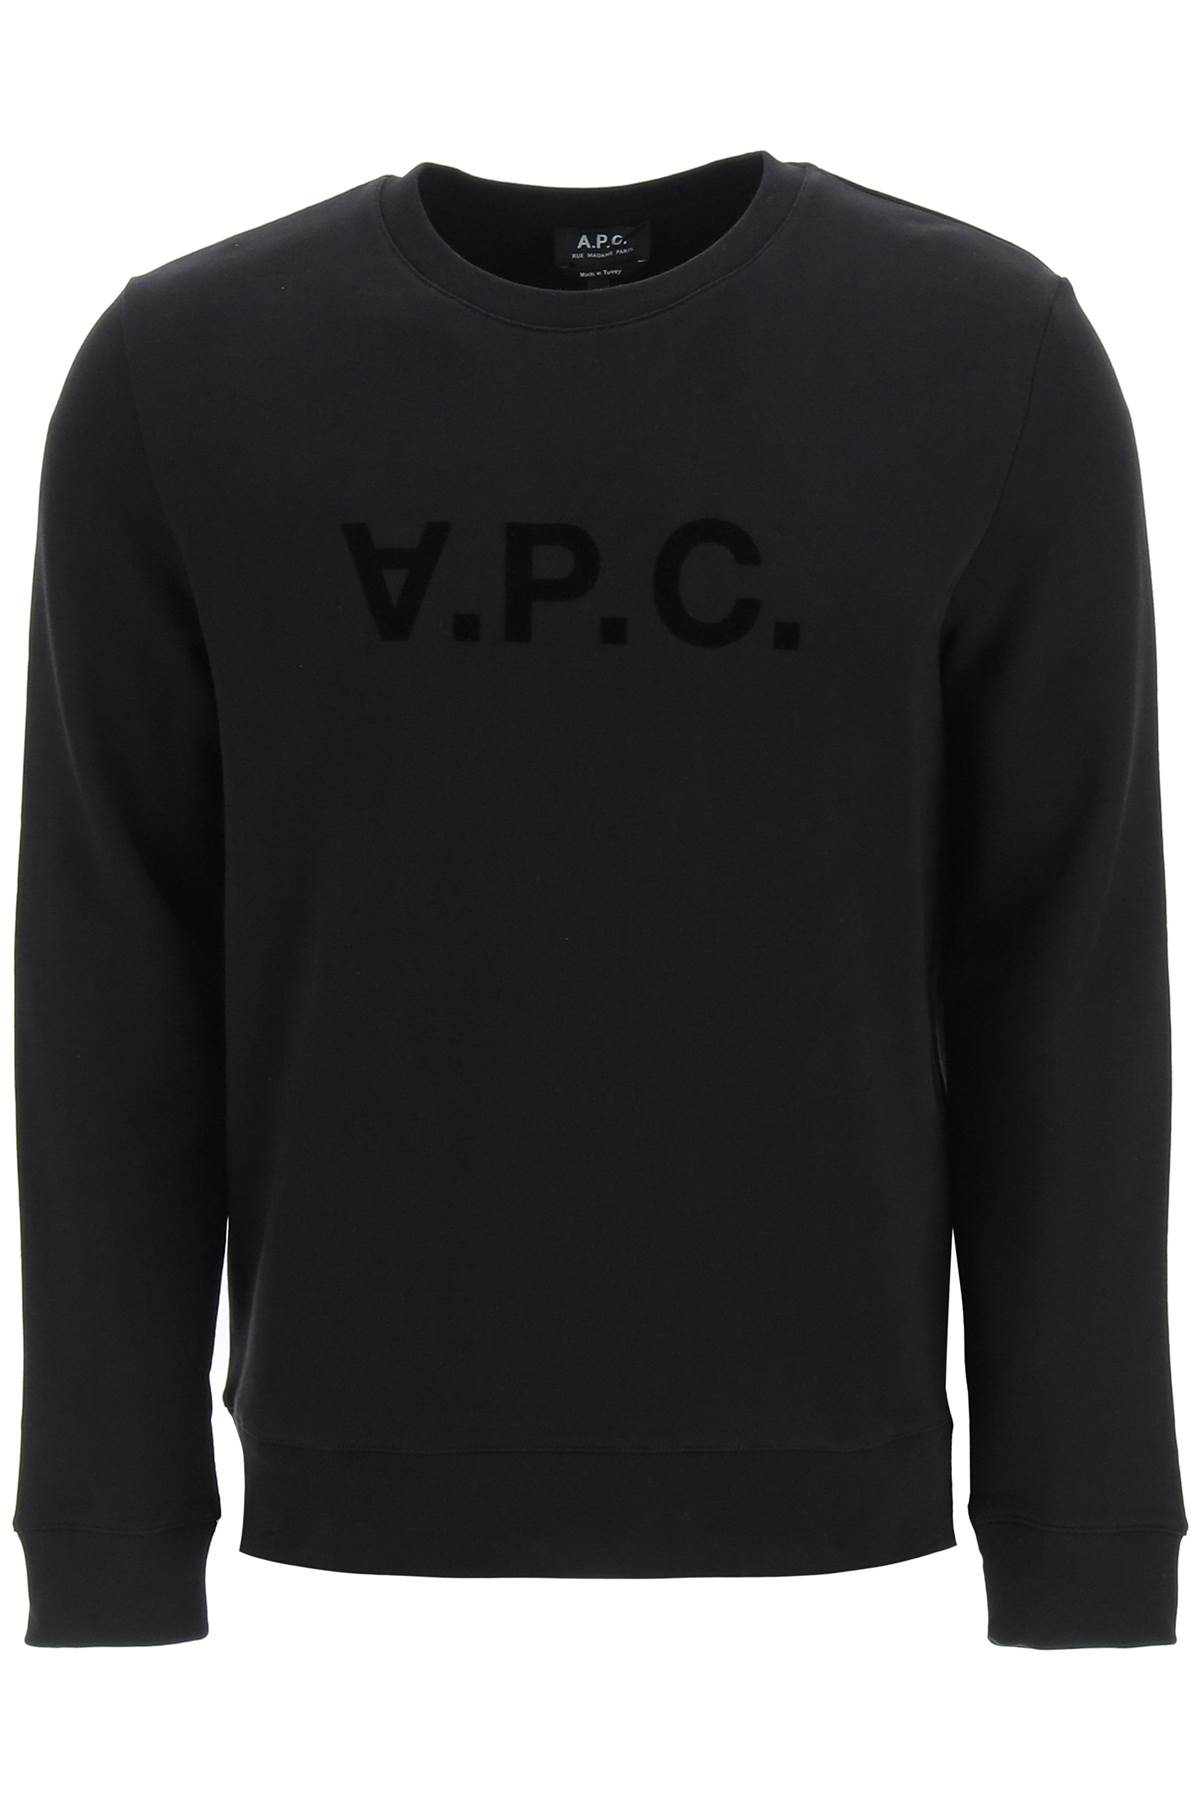 Shop Apc Flock V.p.c. Logo Sweatshirt Fleece In Black